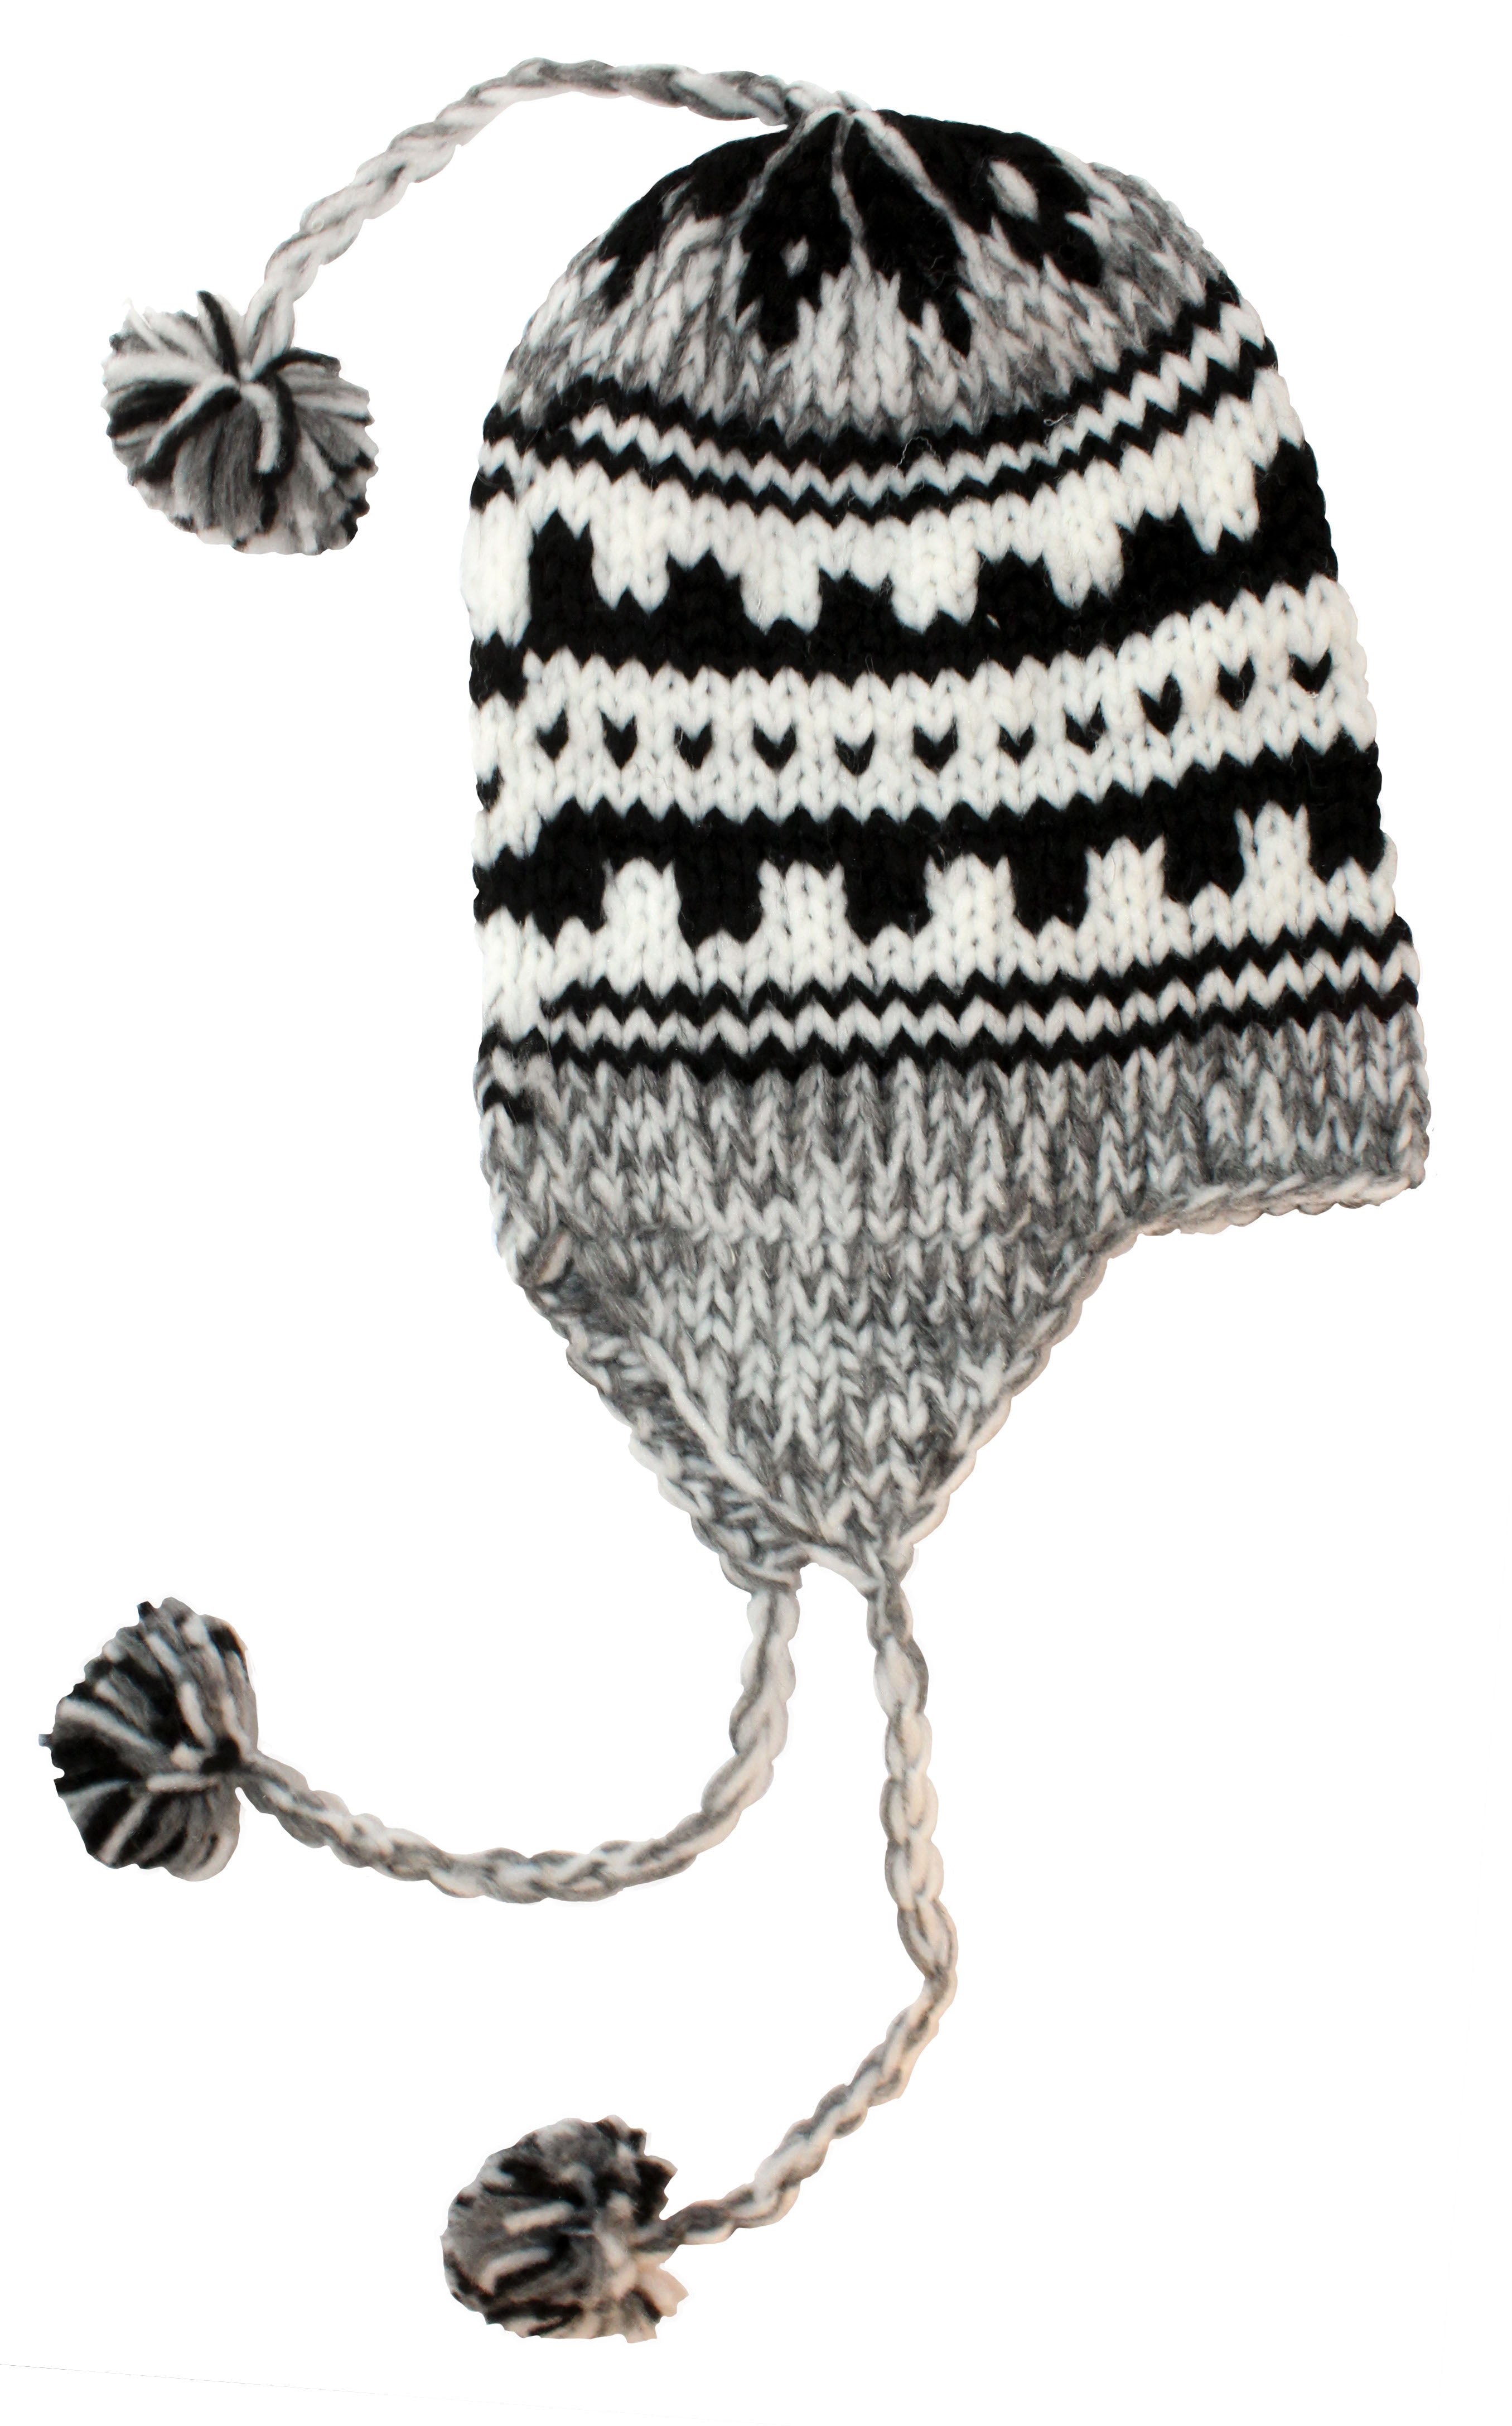 Highlander Winter Hat - Knitted Wool, Gray